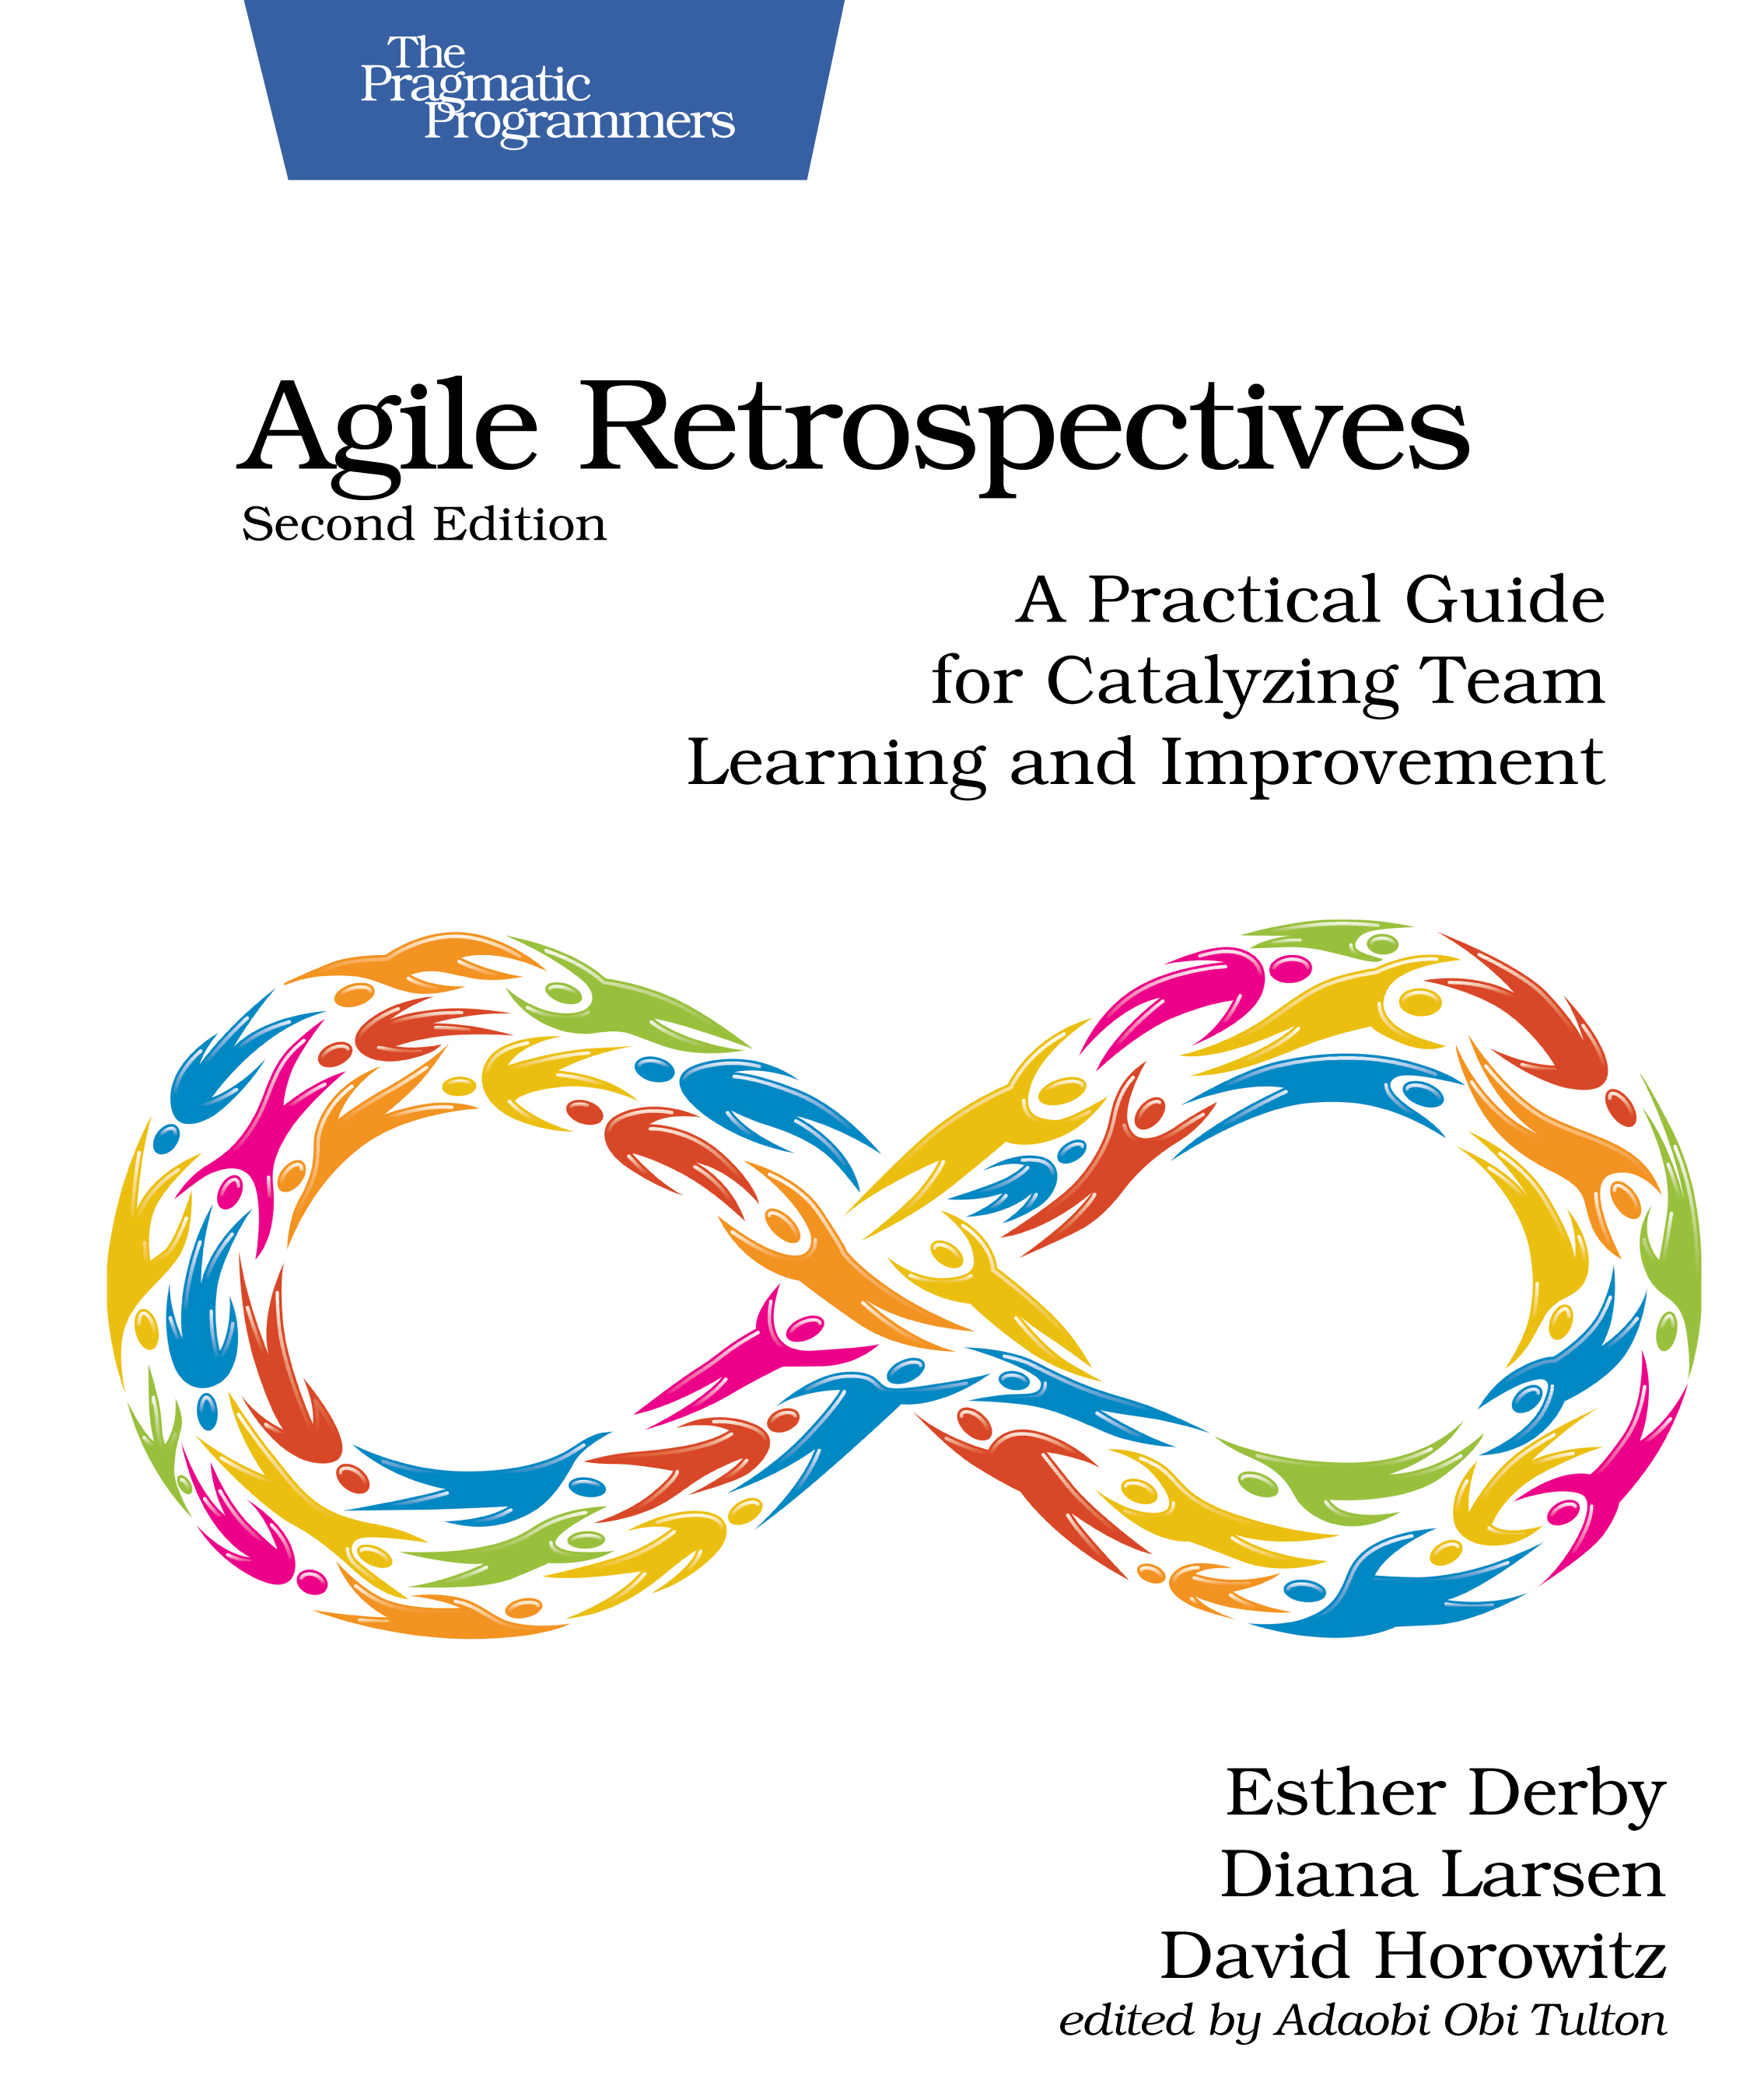 Agile Retrospectives, Second Edition: A Practical Guide for